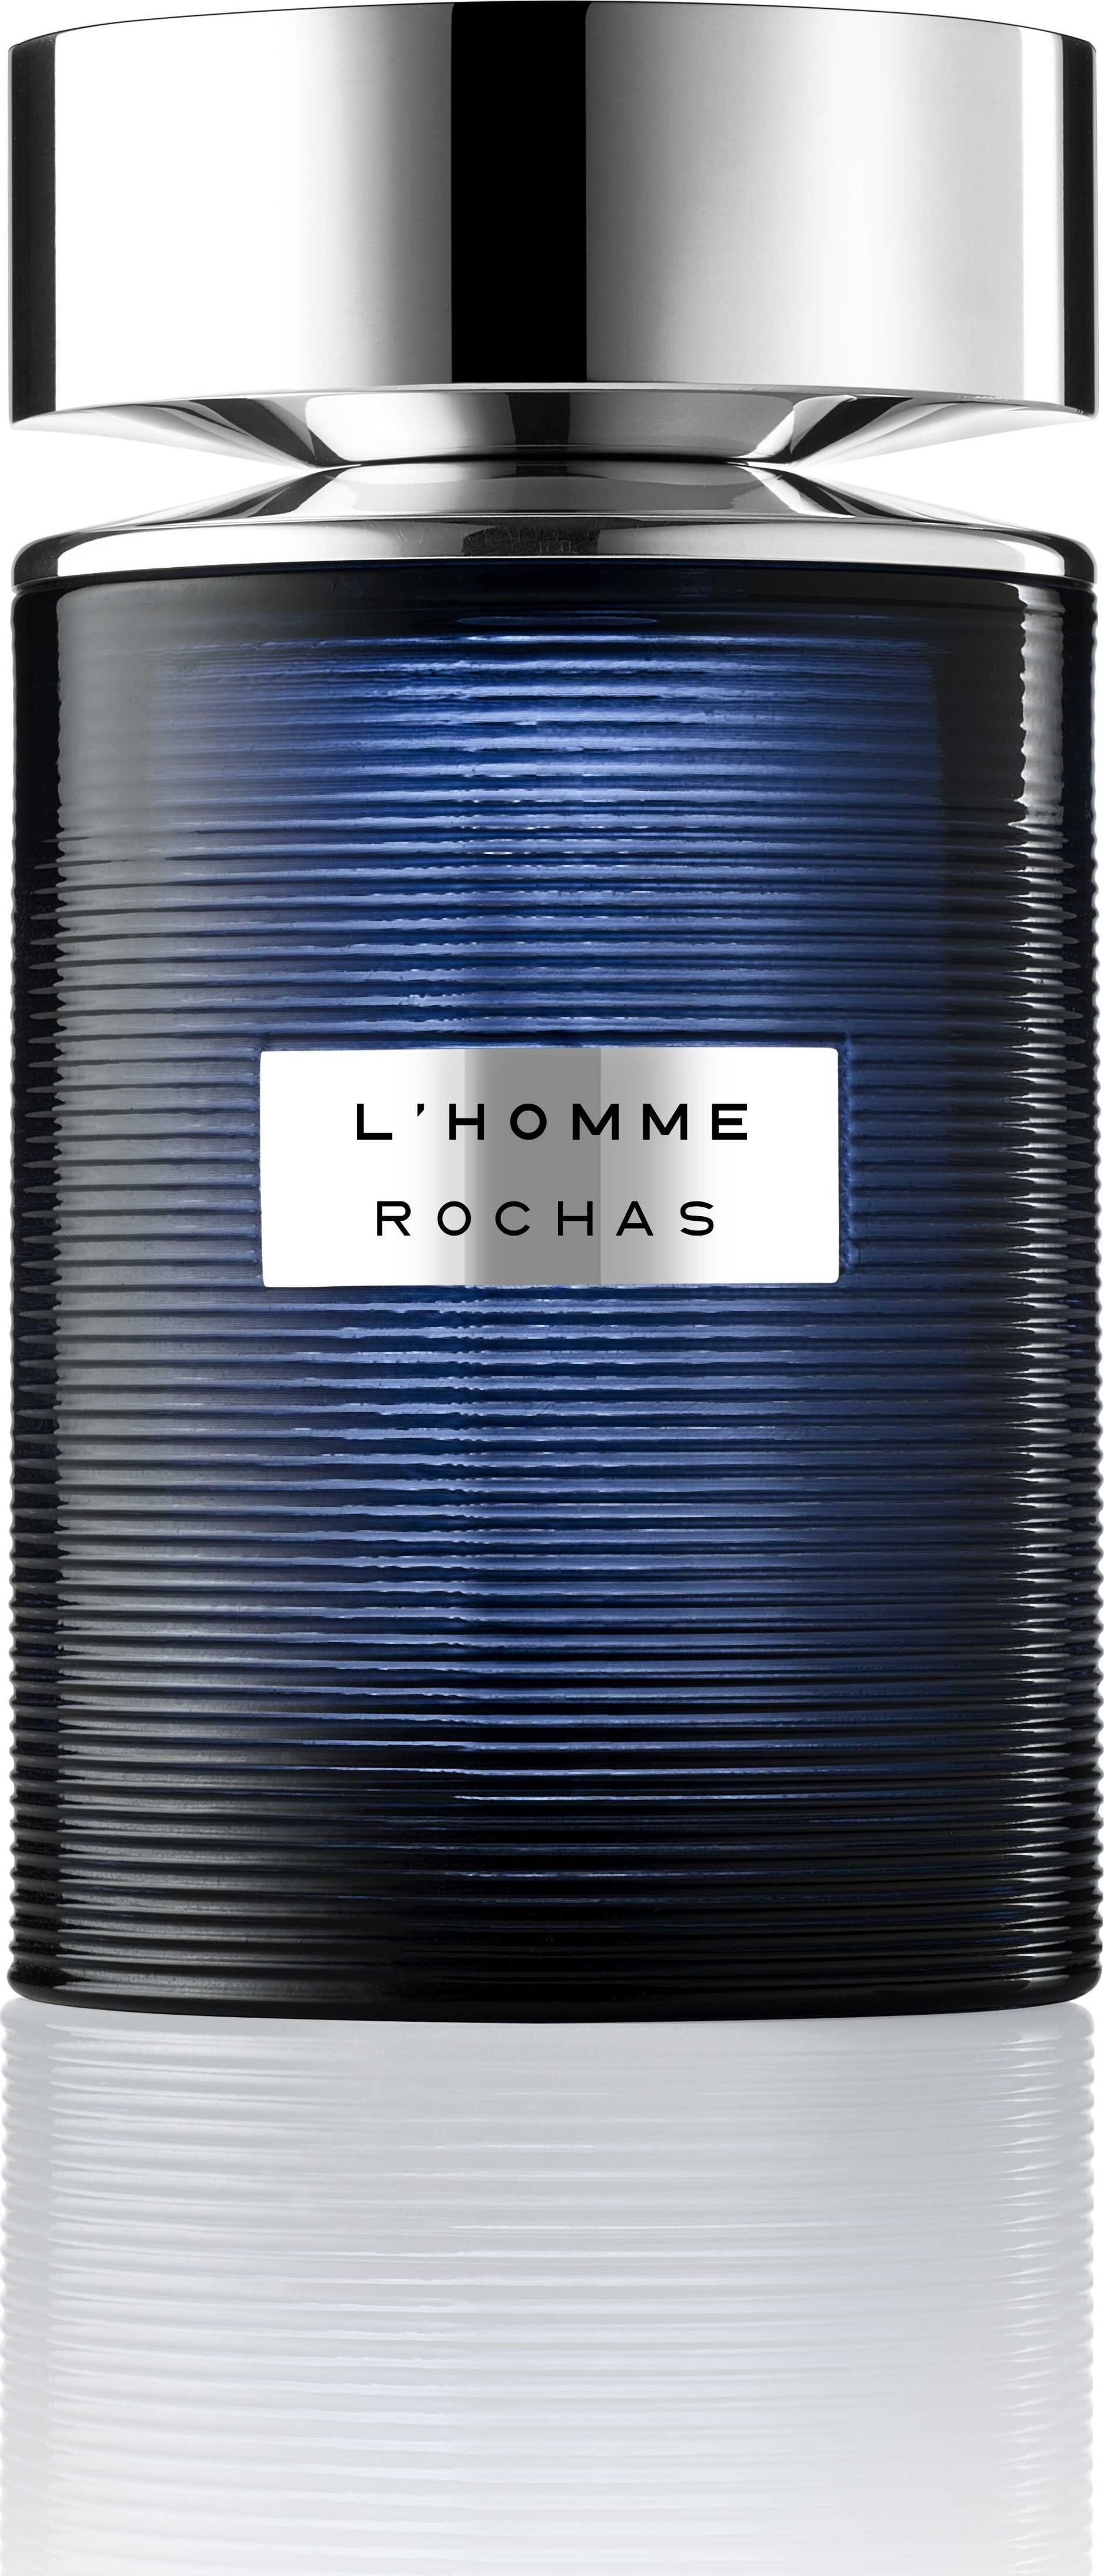 Rochas L'Homme Rochas EDT 100 ml